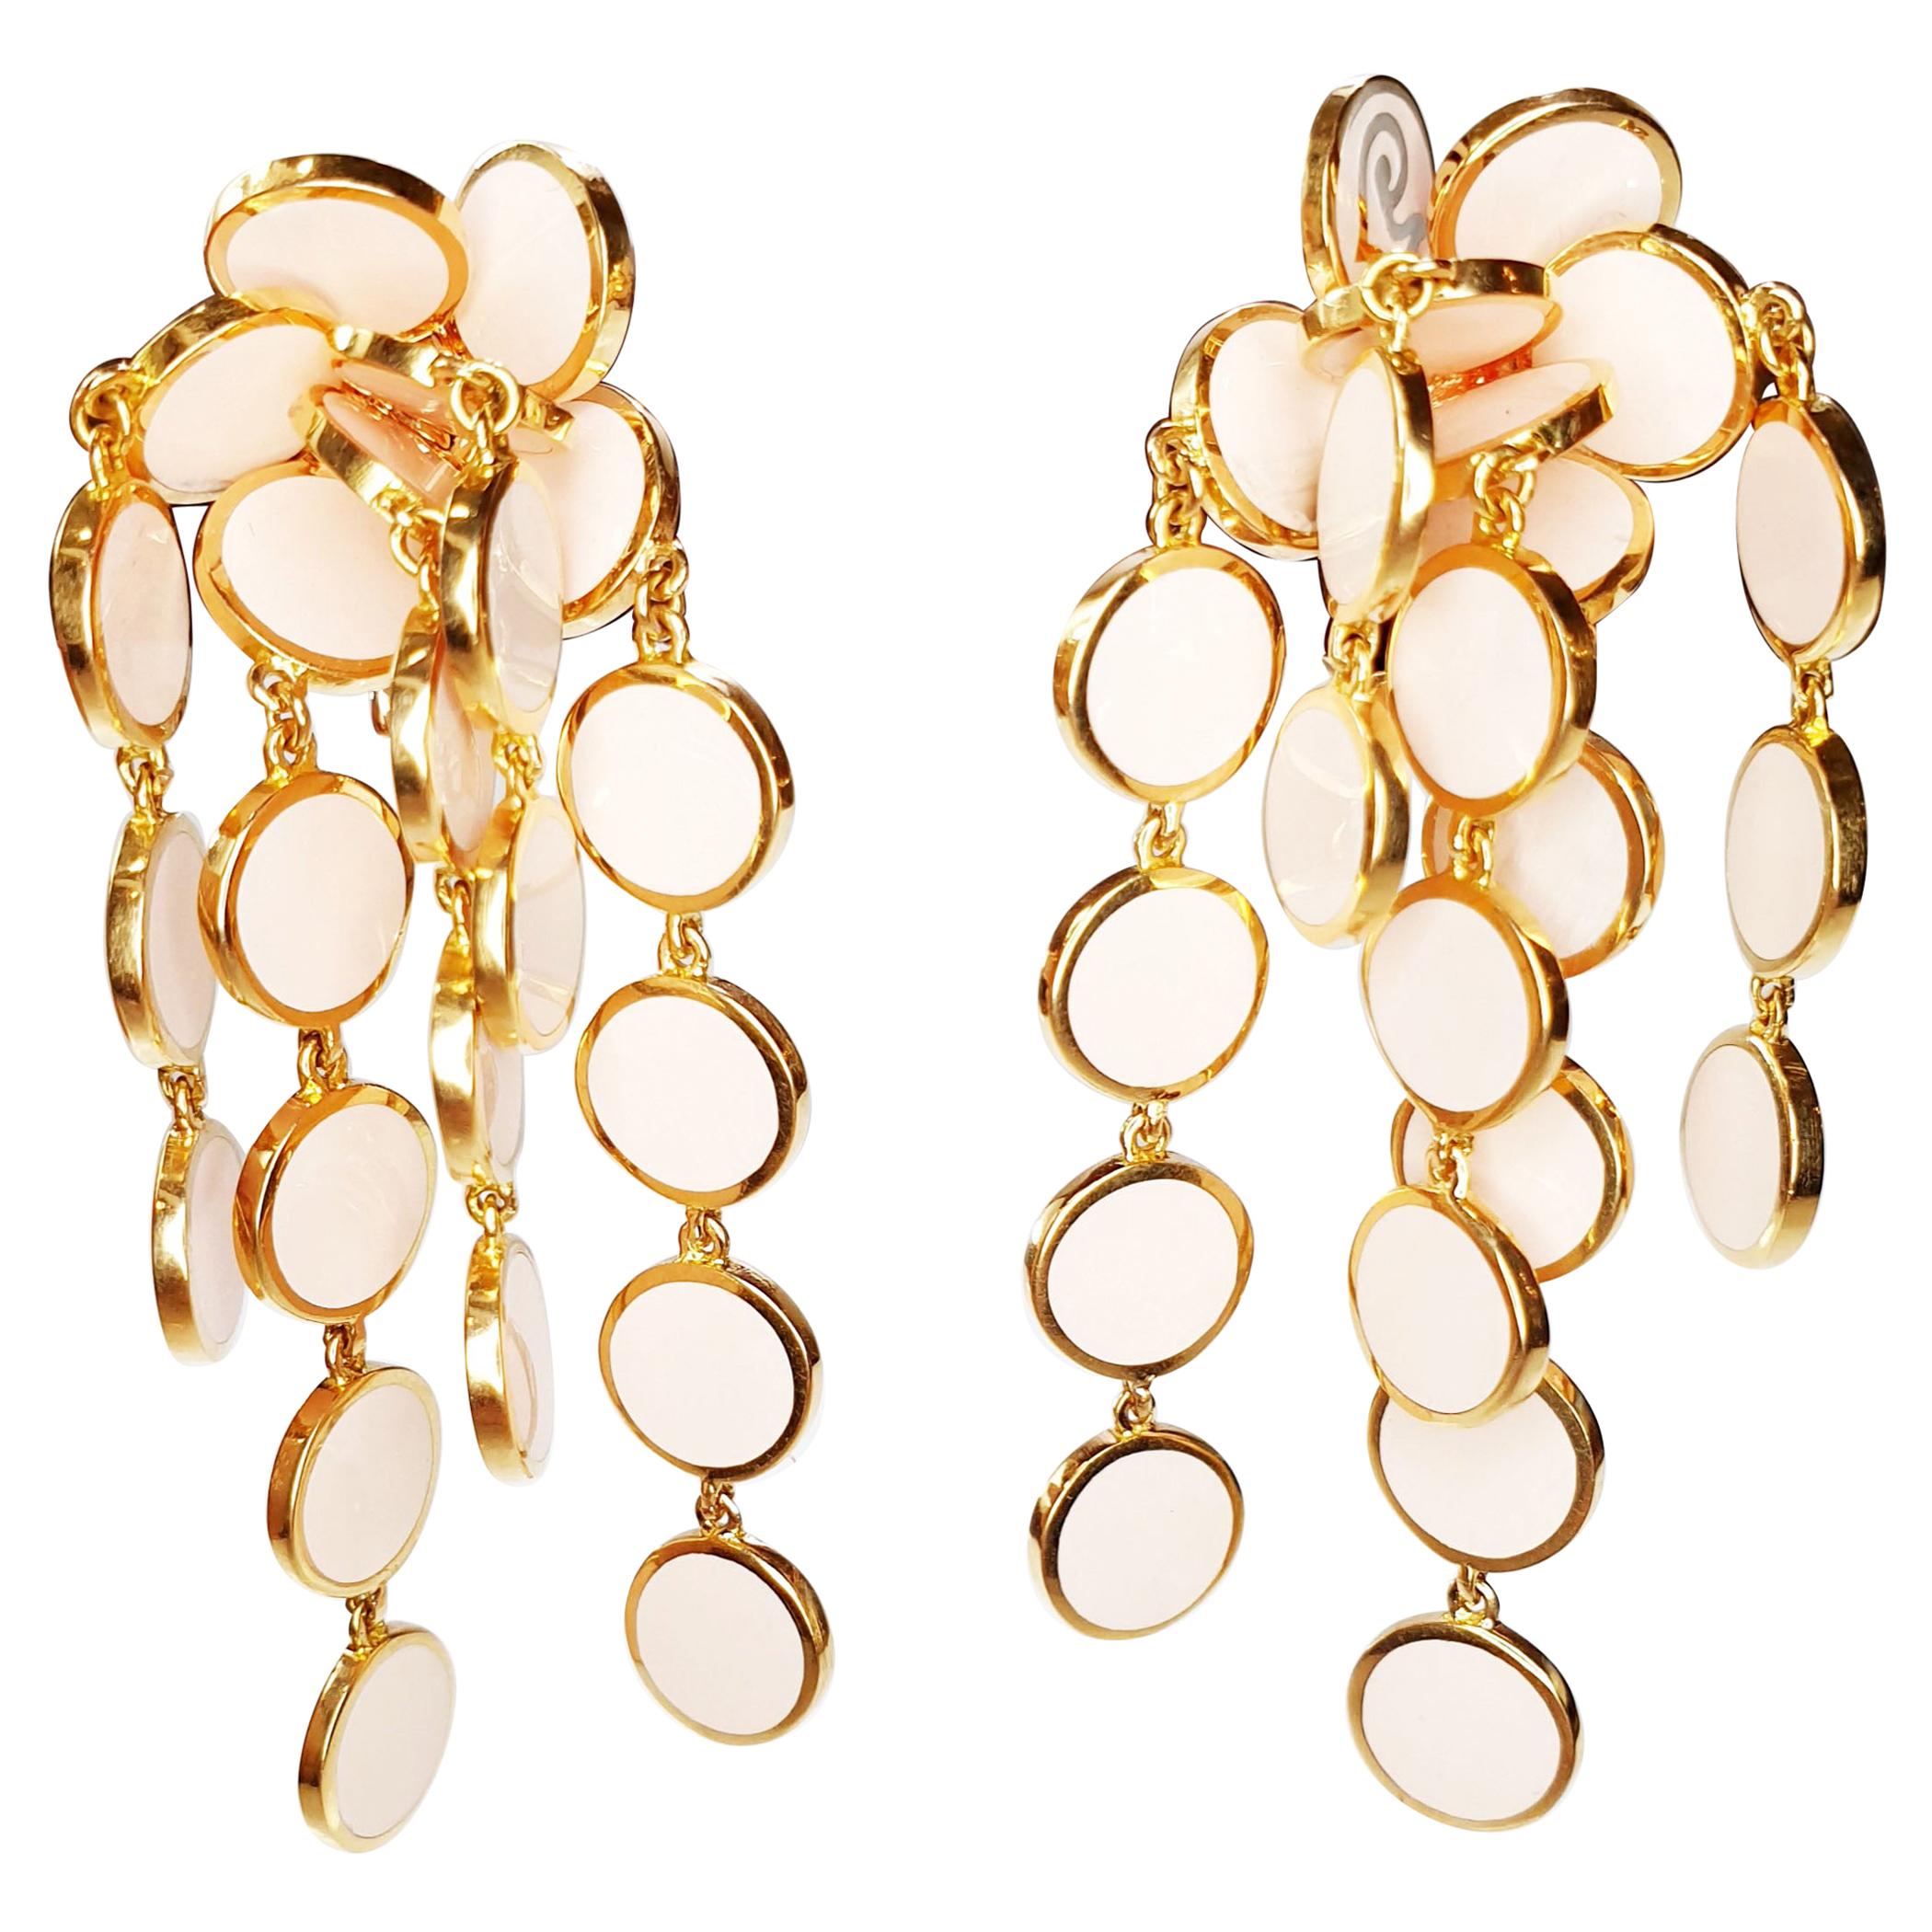 Chantecler "Pailletes" Pink Enamel Petals in 18 Karat Gold Earrings